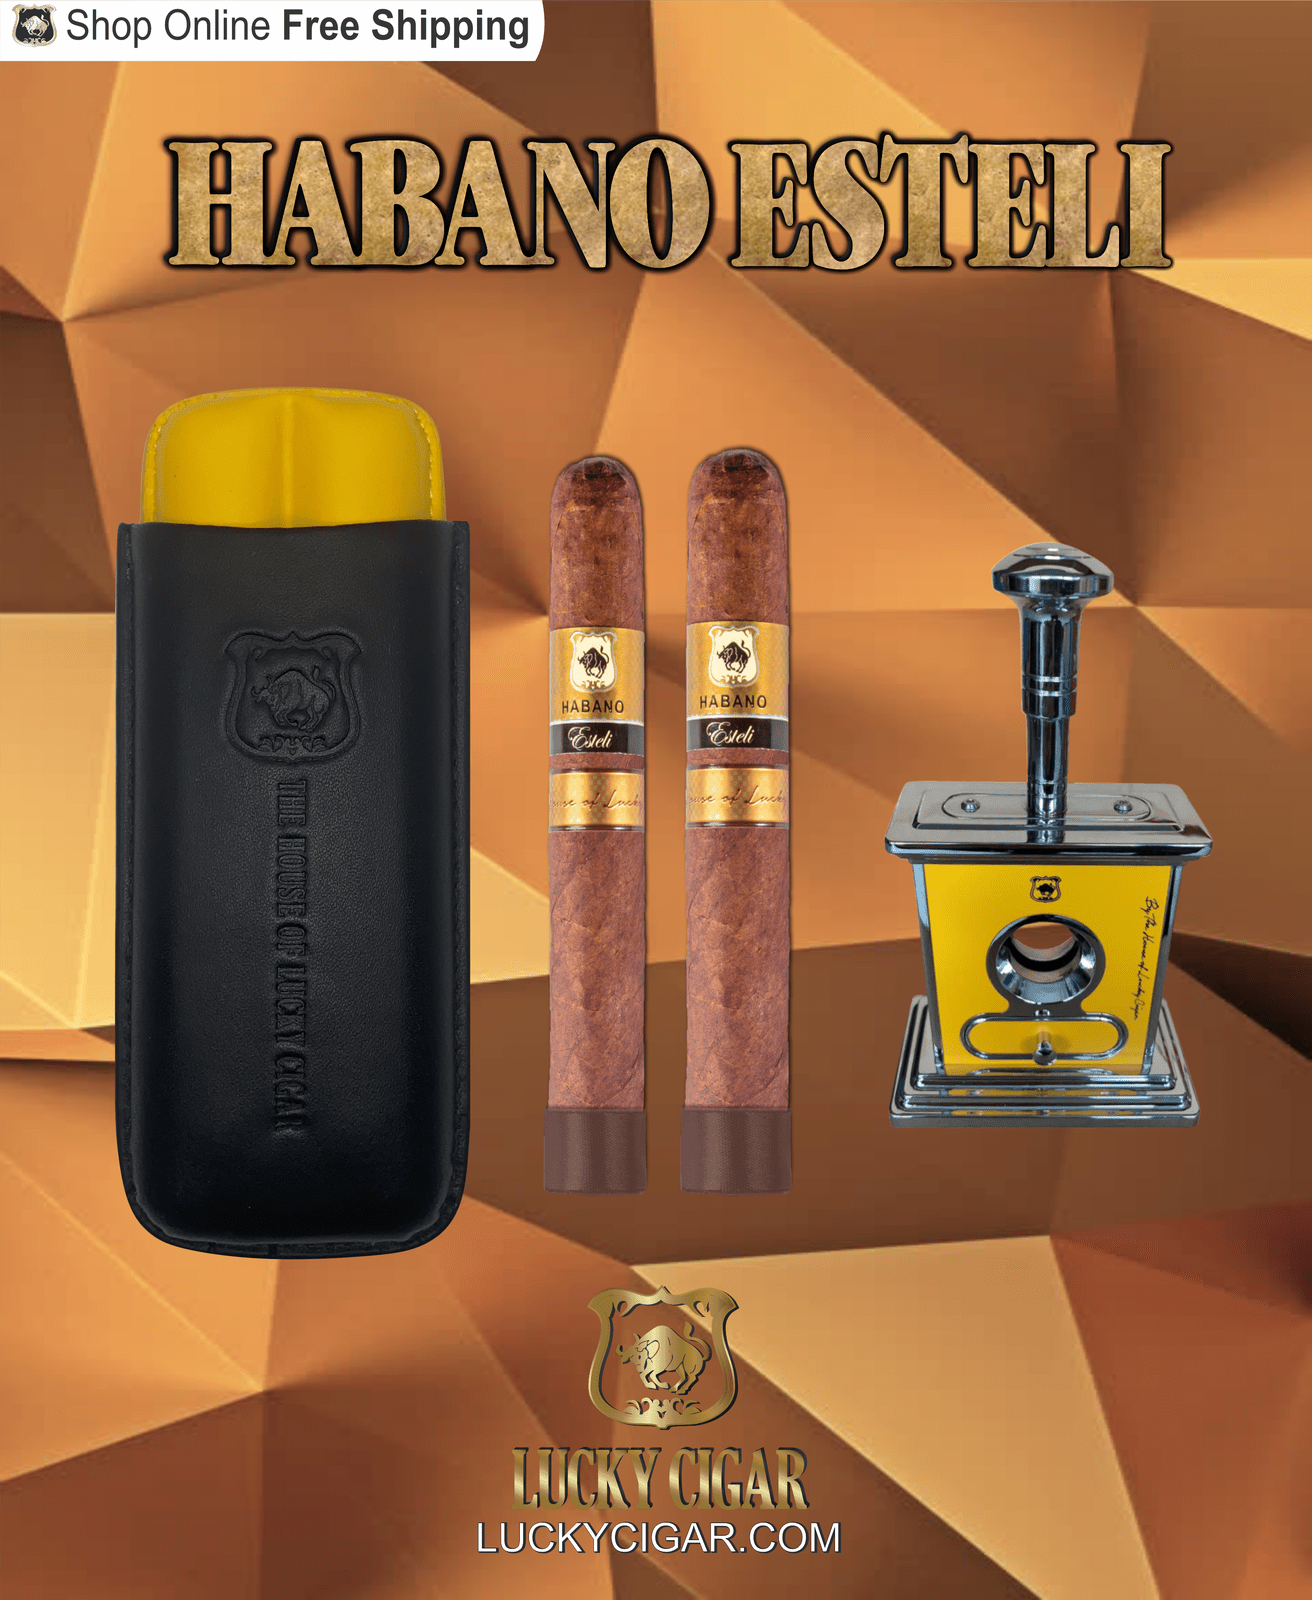 Habano Cigars: Habano Esteli by Lucky Cigar: Set of 2 Cigars, 2 Churchill with Humidor, Table Cutter